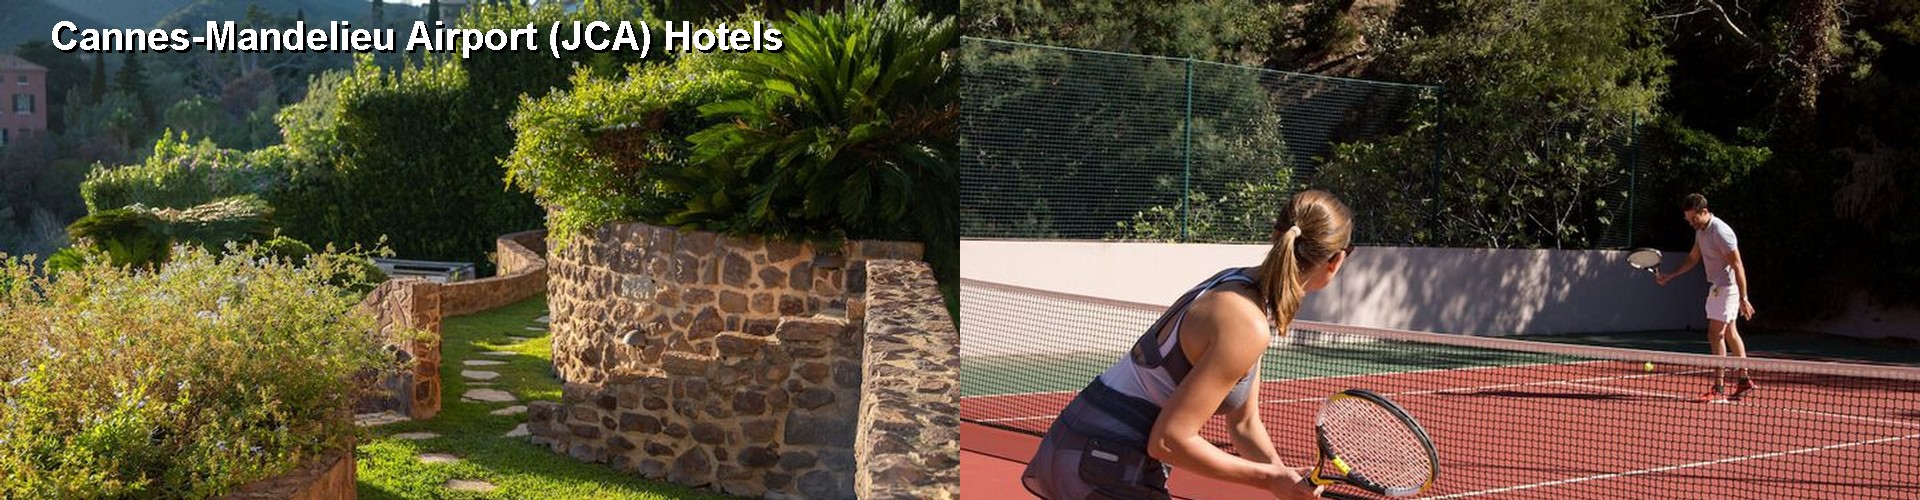 5 Best Hotels near Cannes-Mandelieu Airport (JCA)